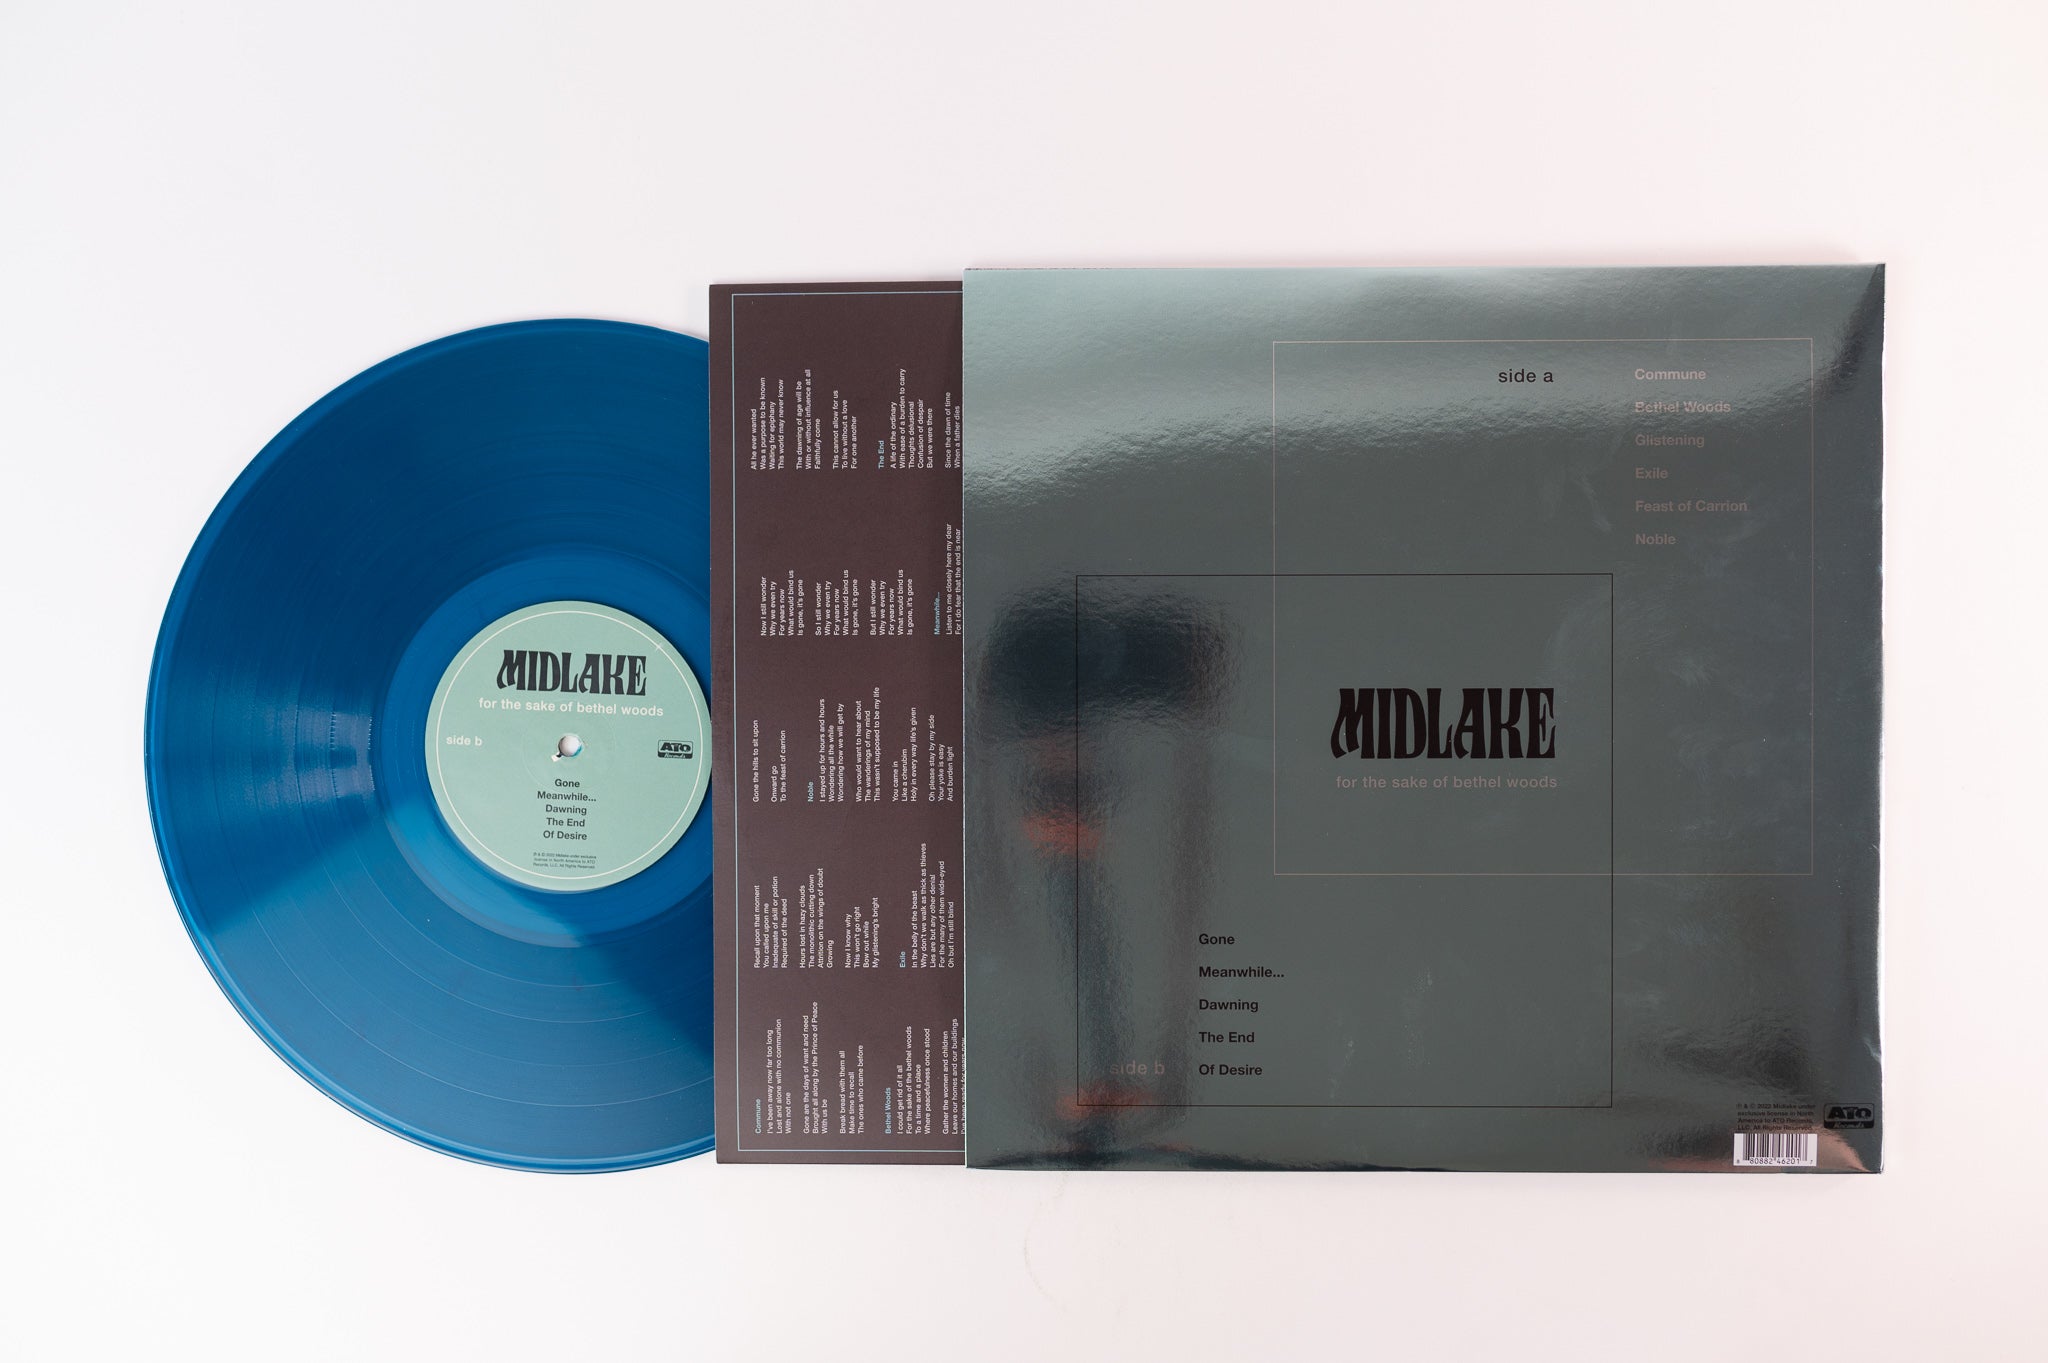 Midlake - For The Sake Of Bethel Woods on ATO Limited Transparent Teal Vinyl